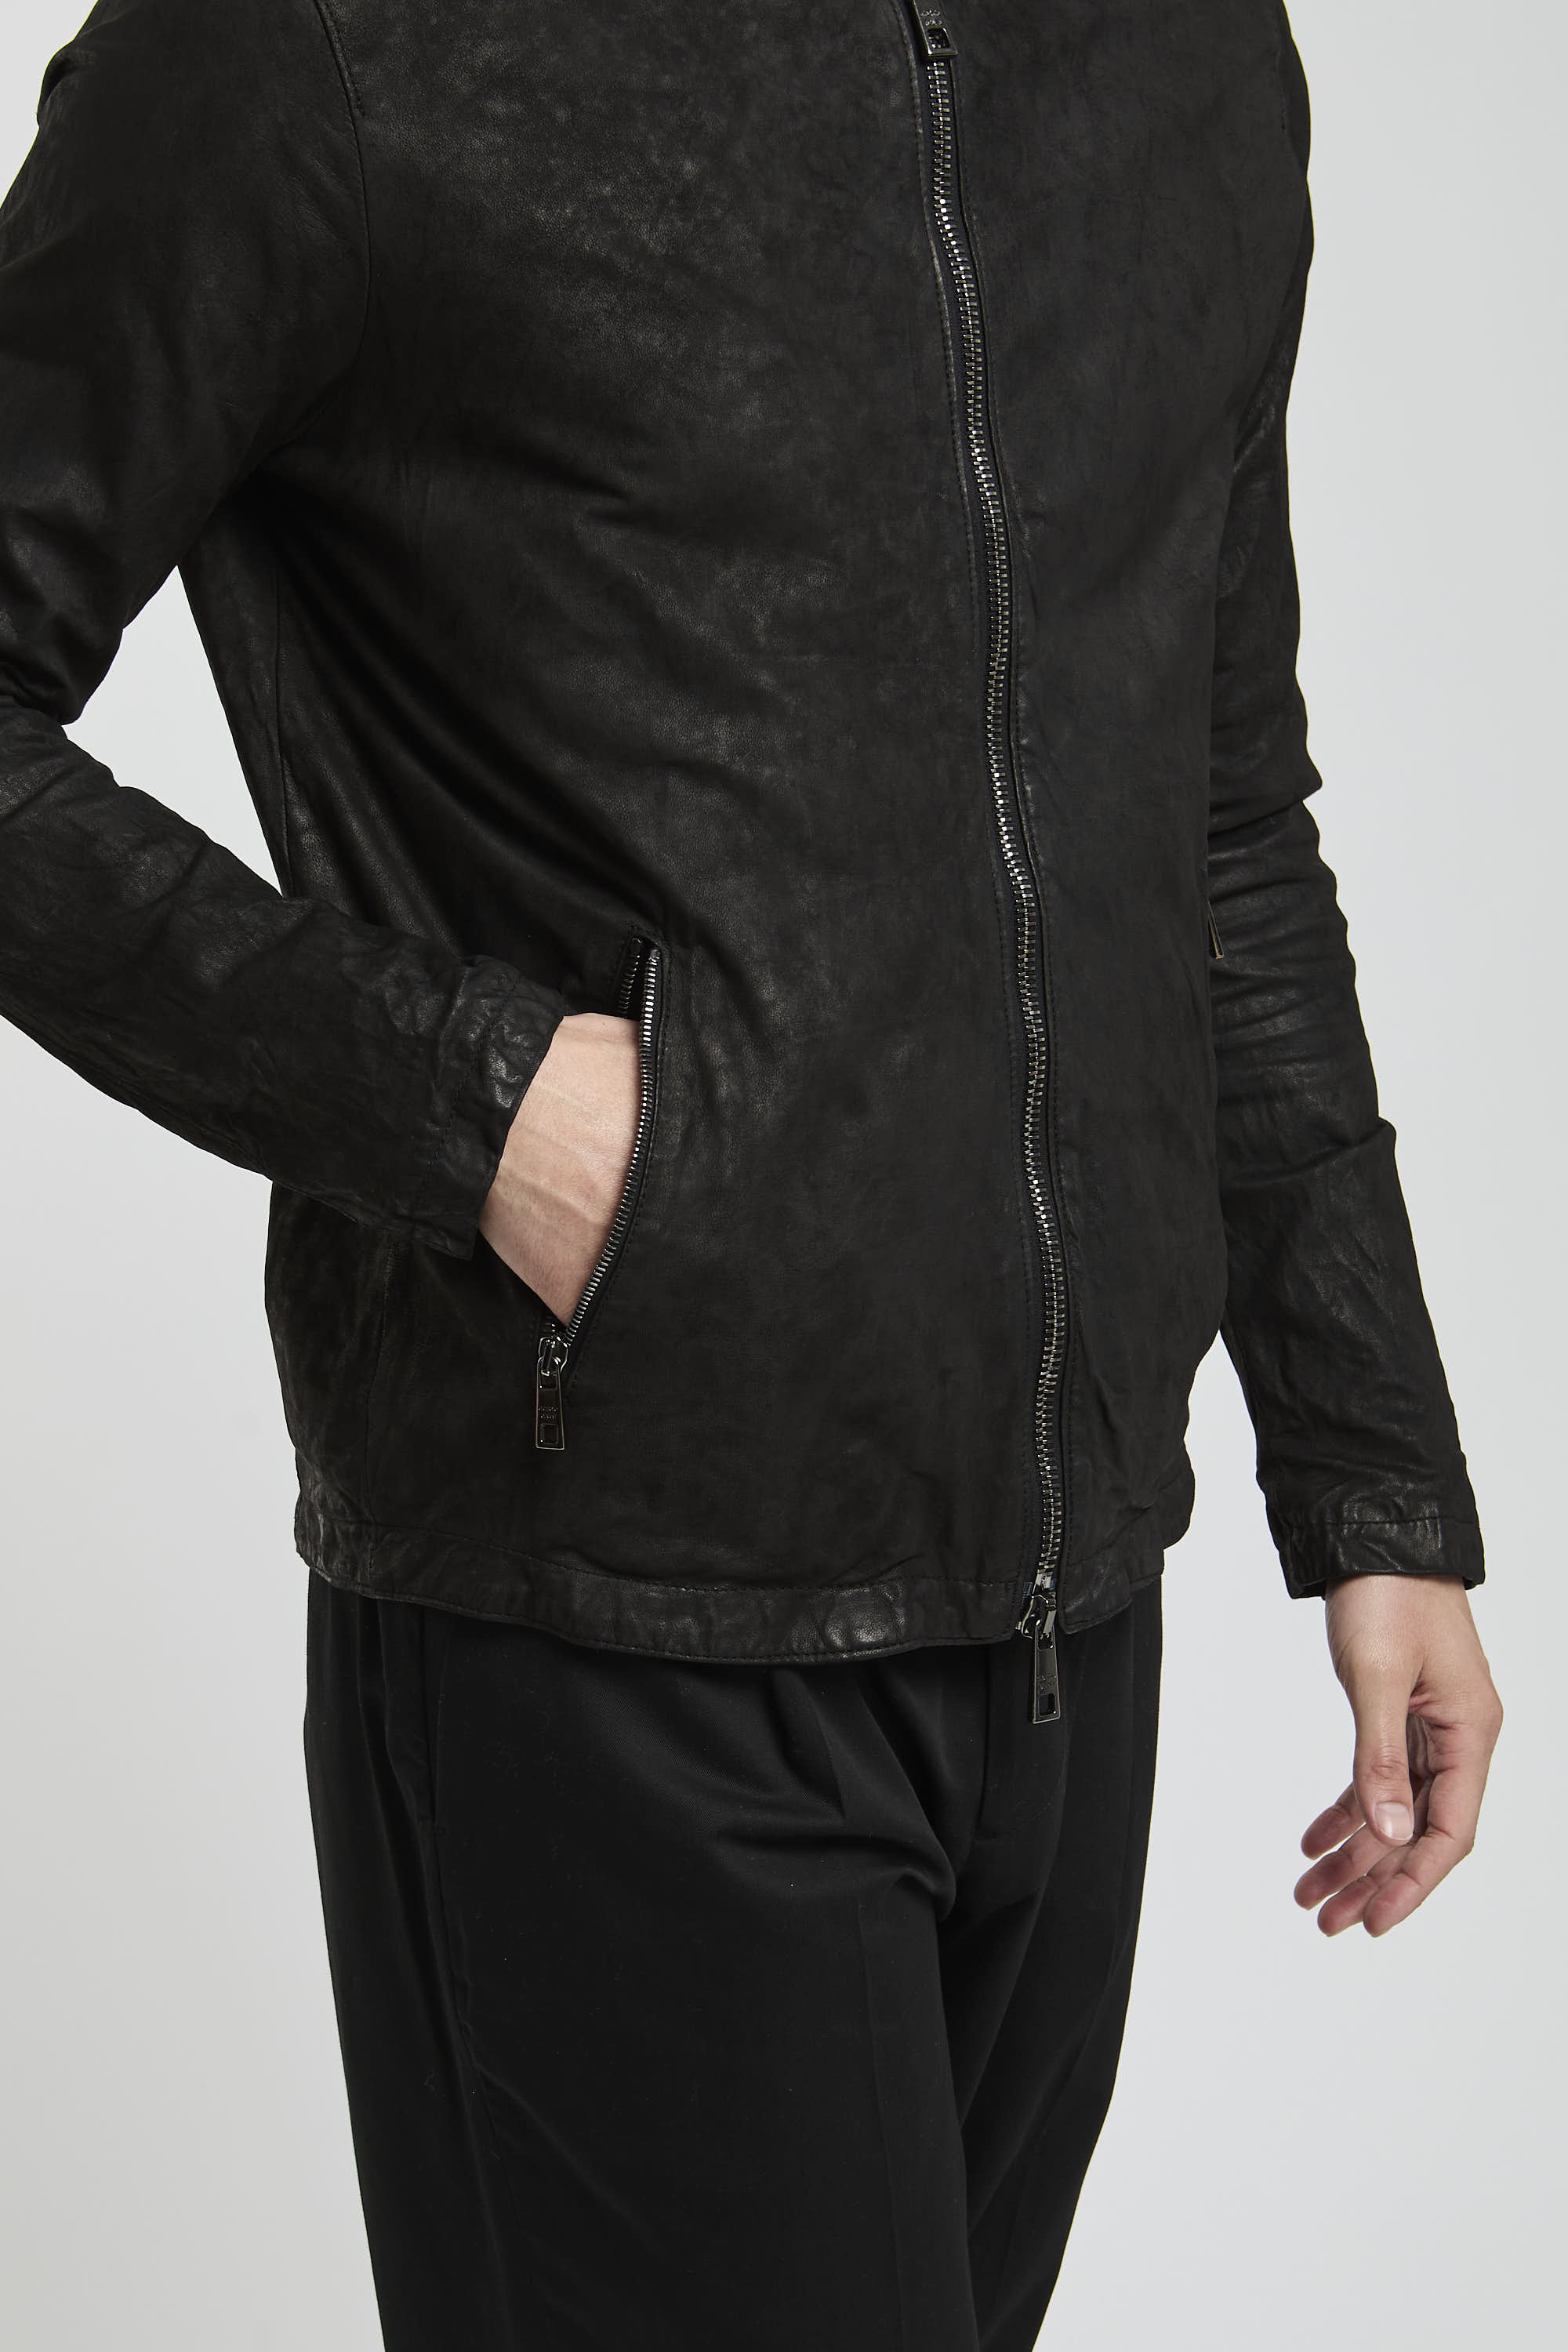 Giorgio Brato Black Leather Jacket-4